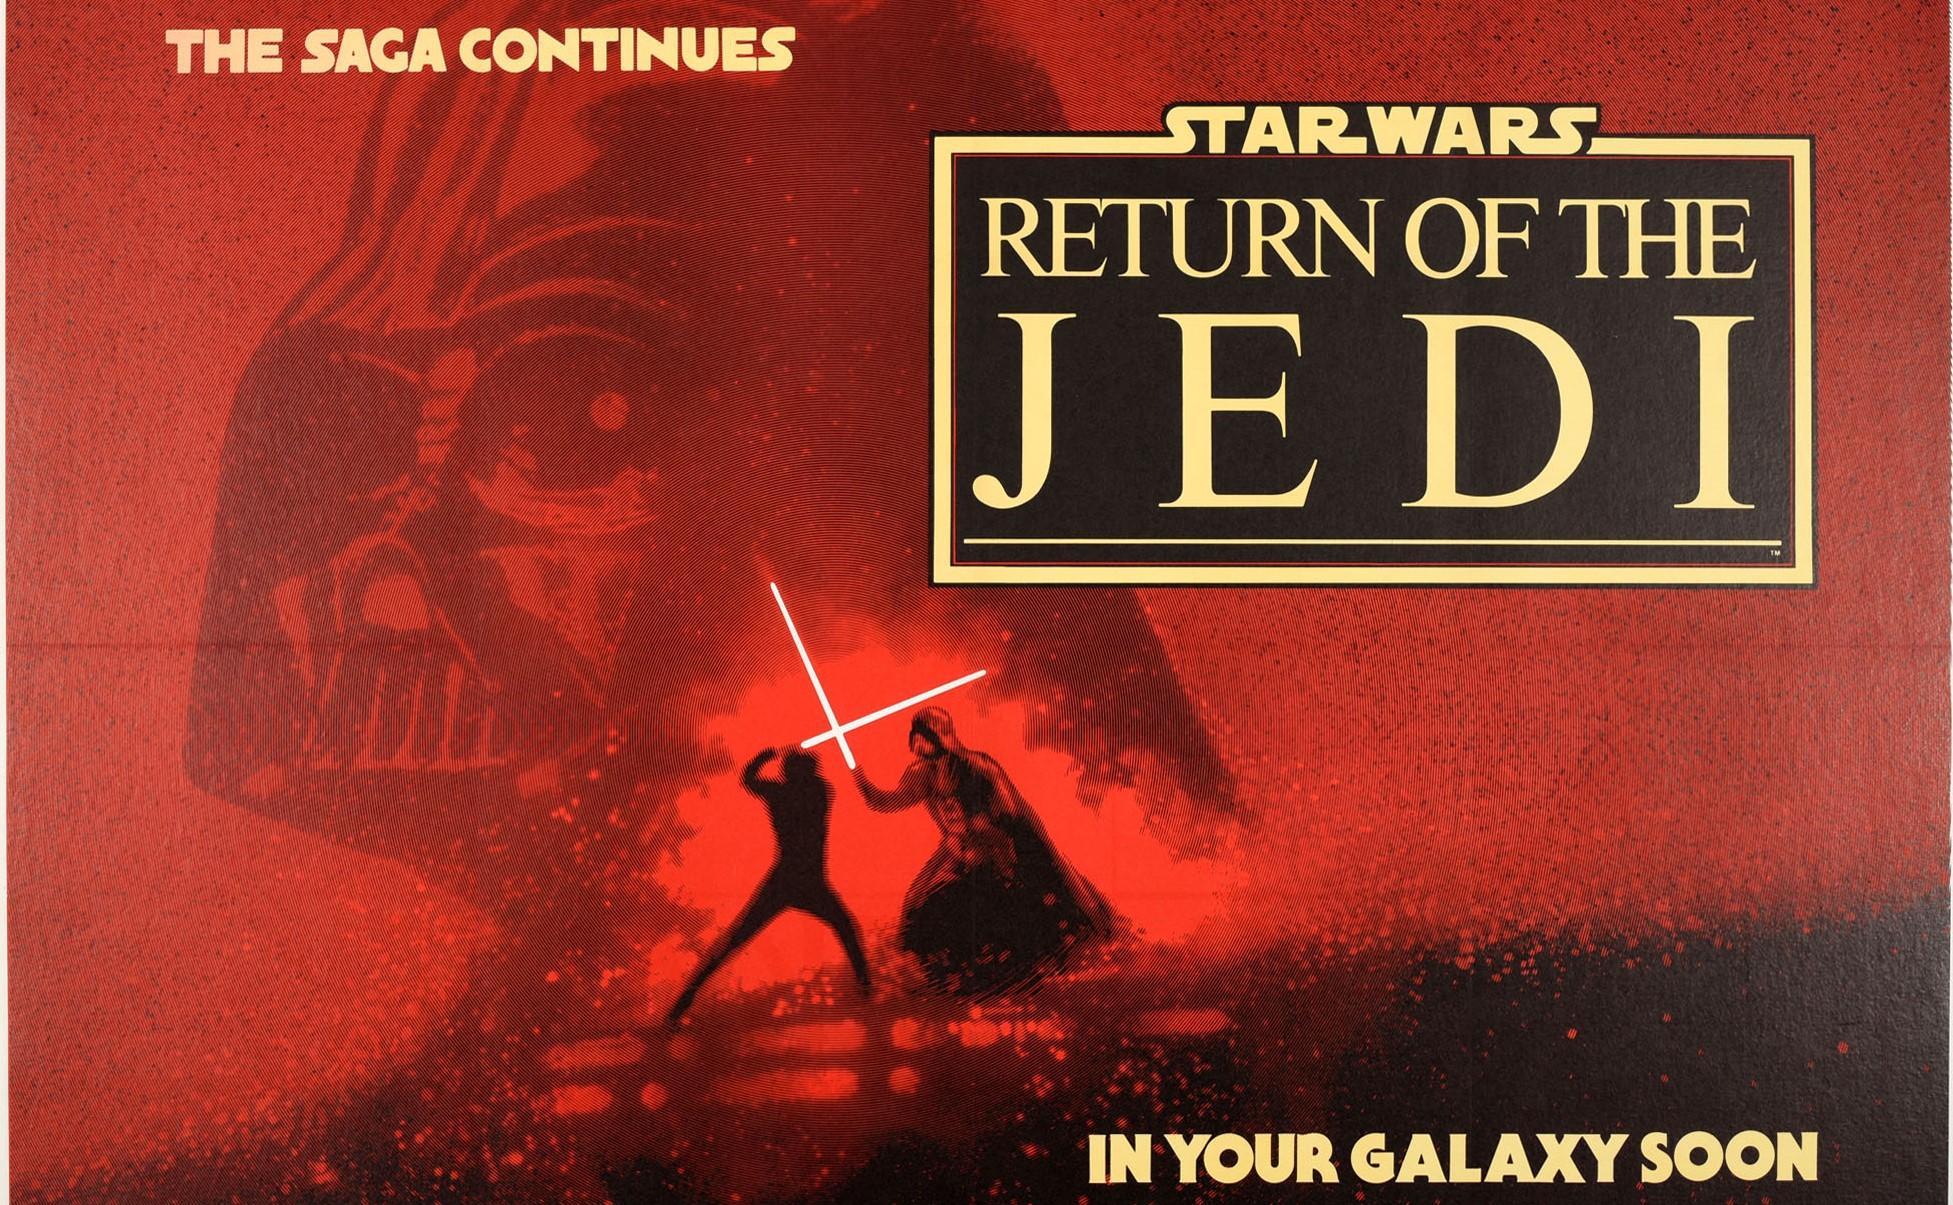 Original Vintage Film Poster Star Wars Return Of The Jedi Darth Vader Skywalker - Print by Drew Struzan